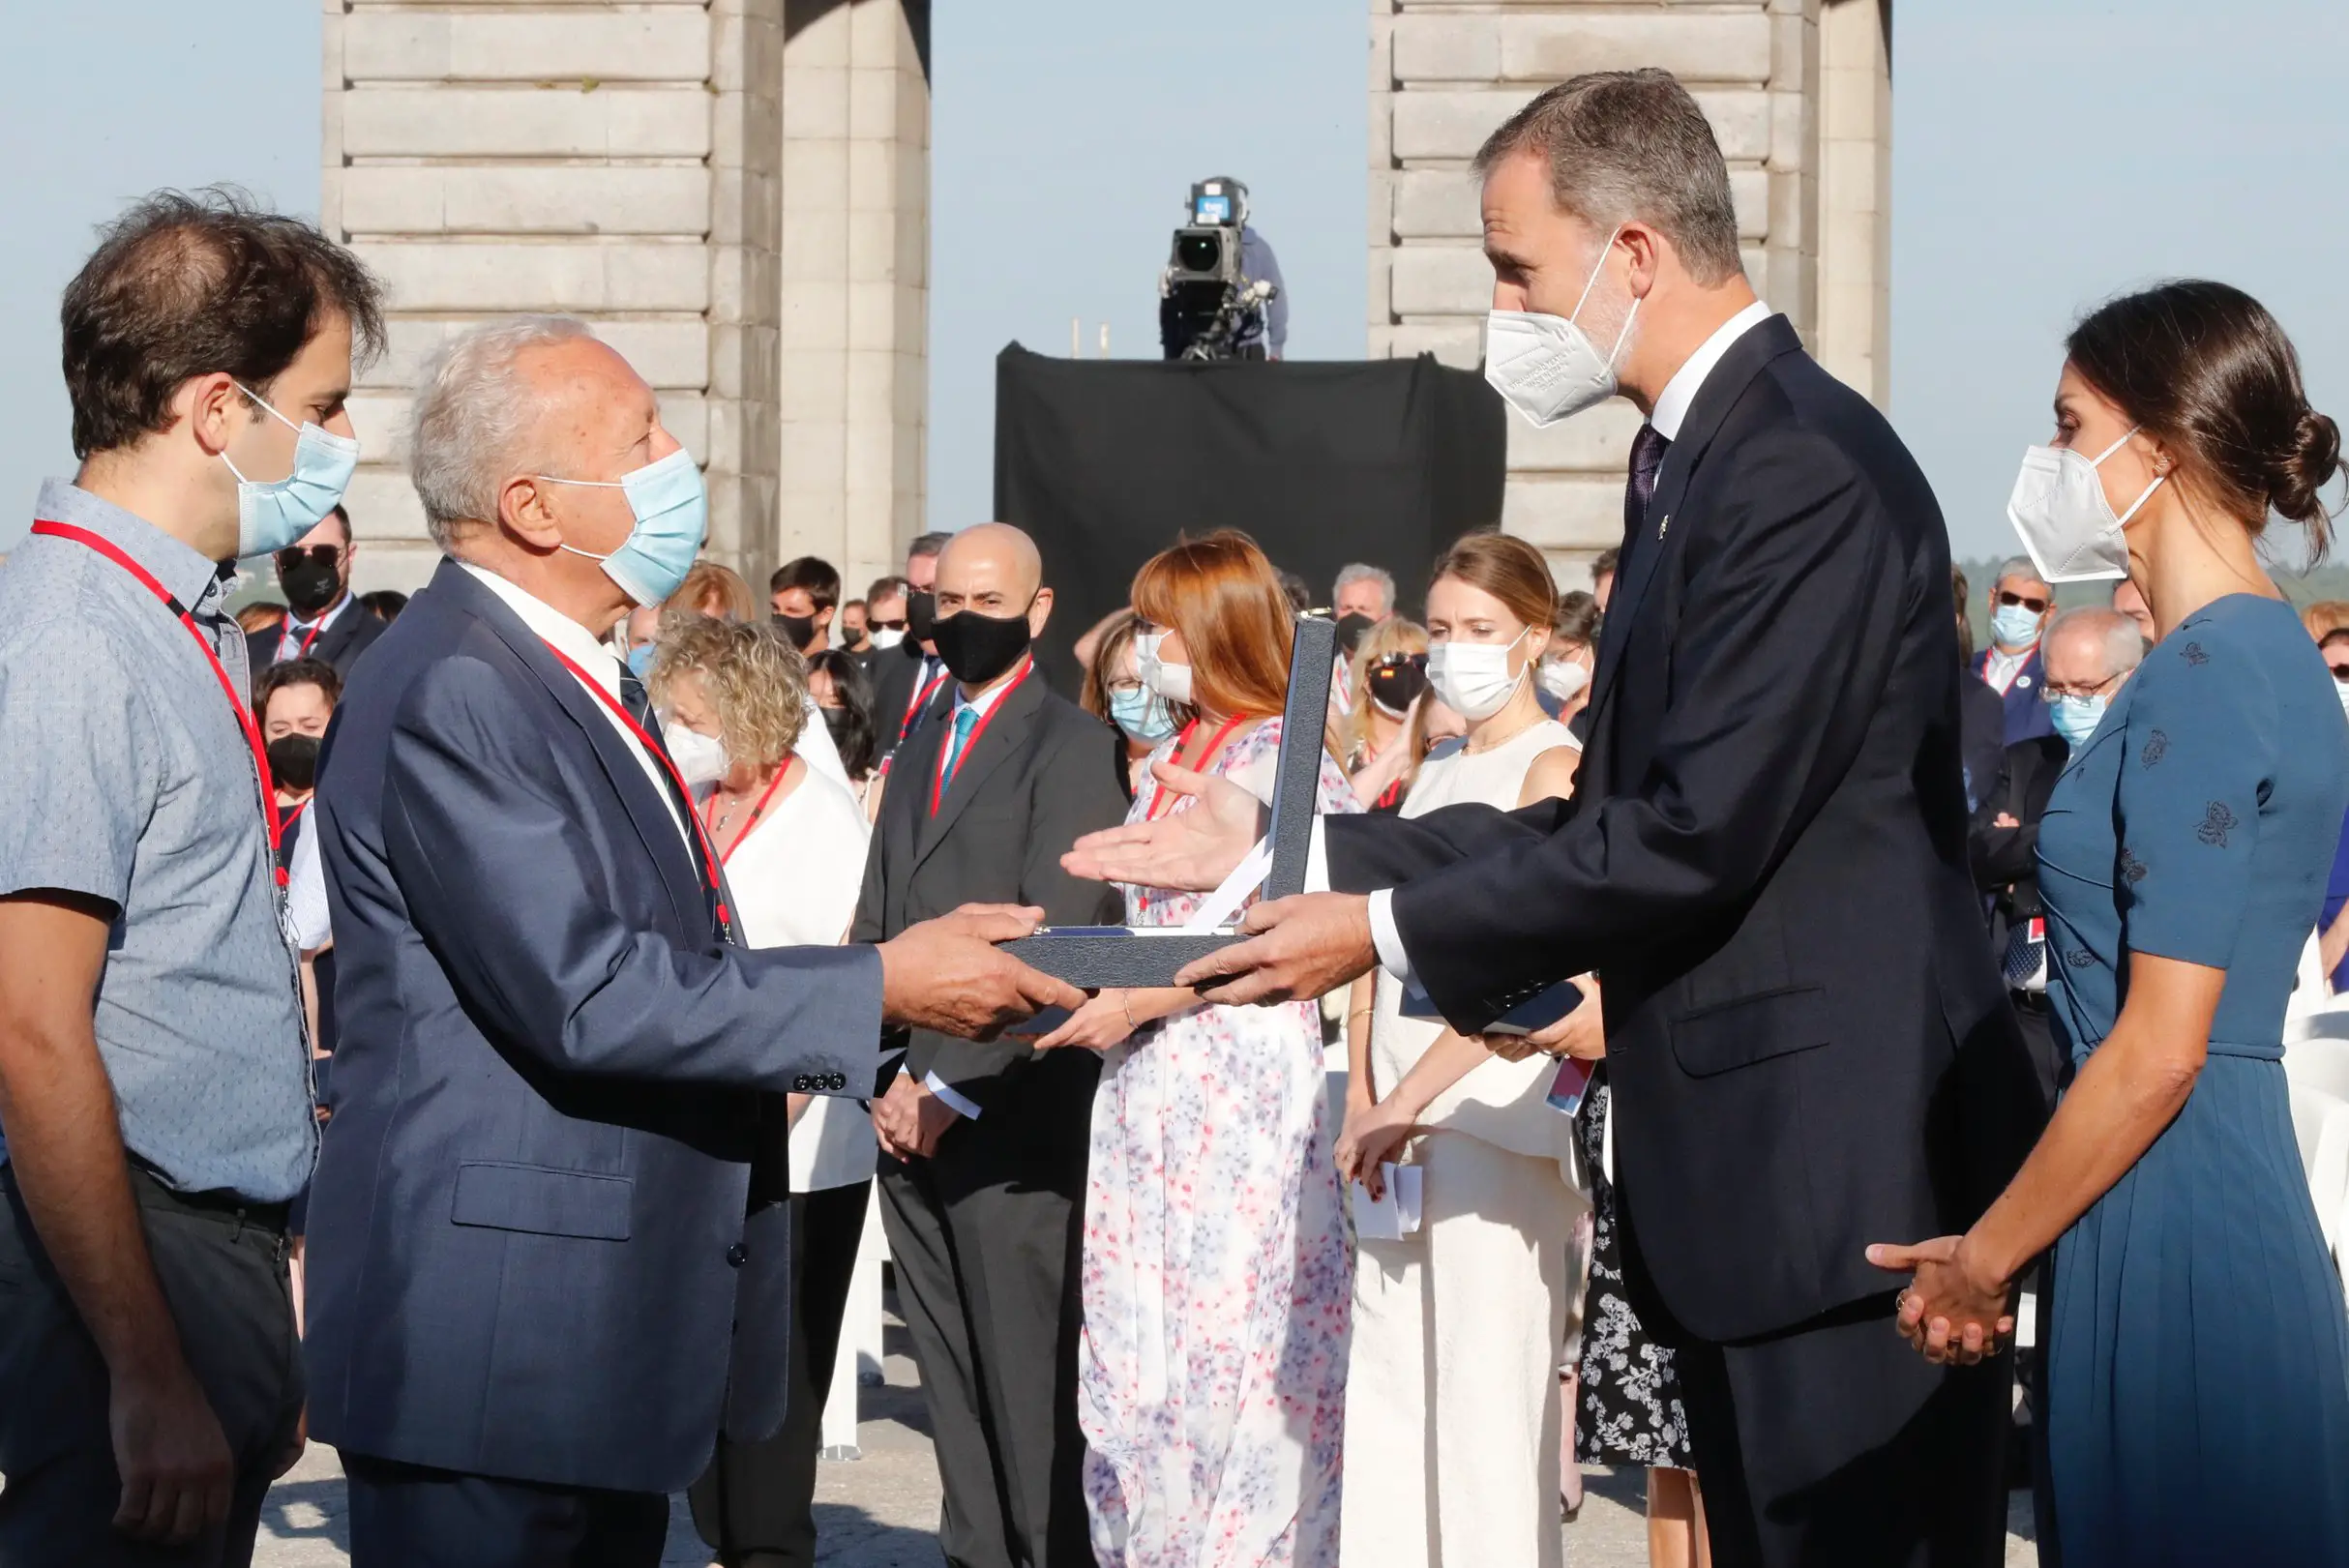 King Felipe presenting Order of Civil Merit to the family members of Frontline workersa